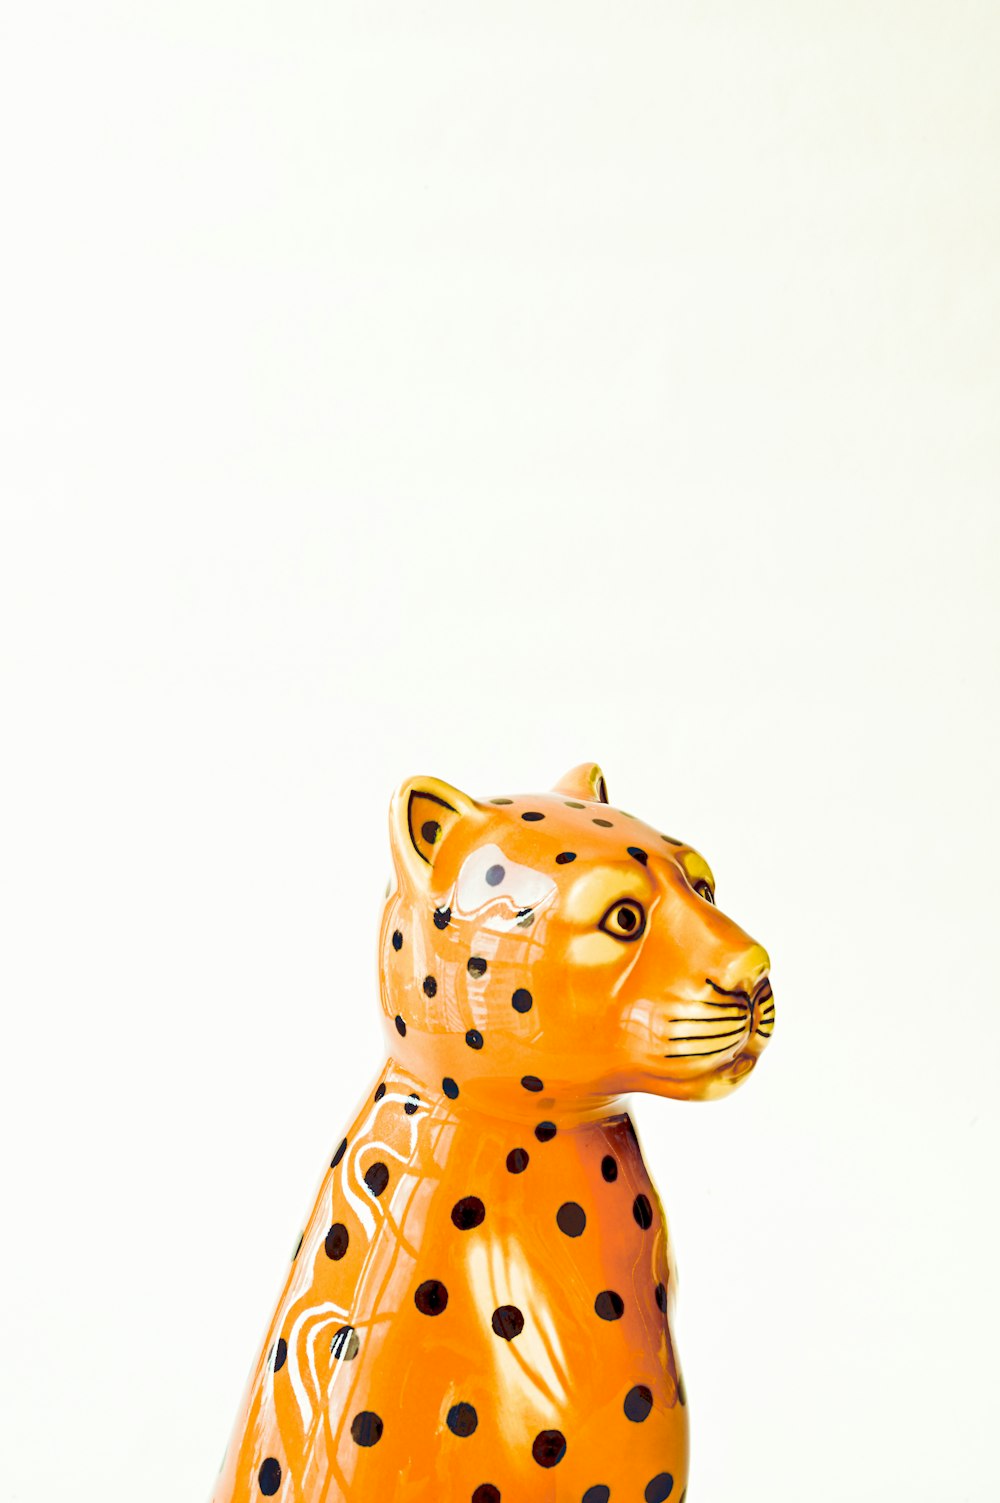 brown and black polka dot cat figurine